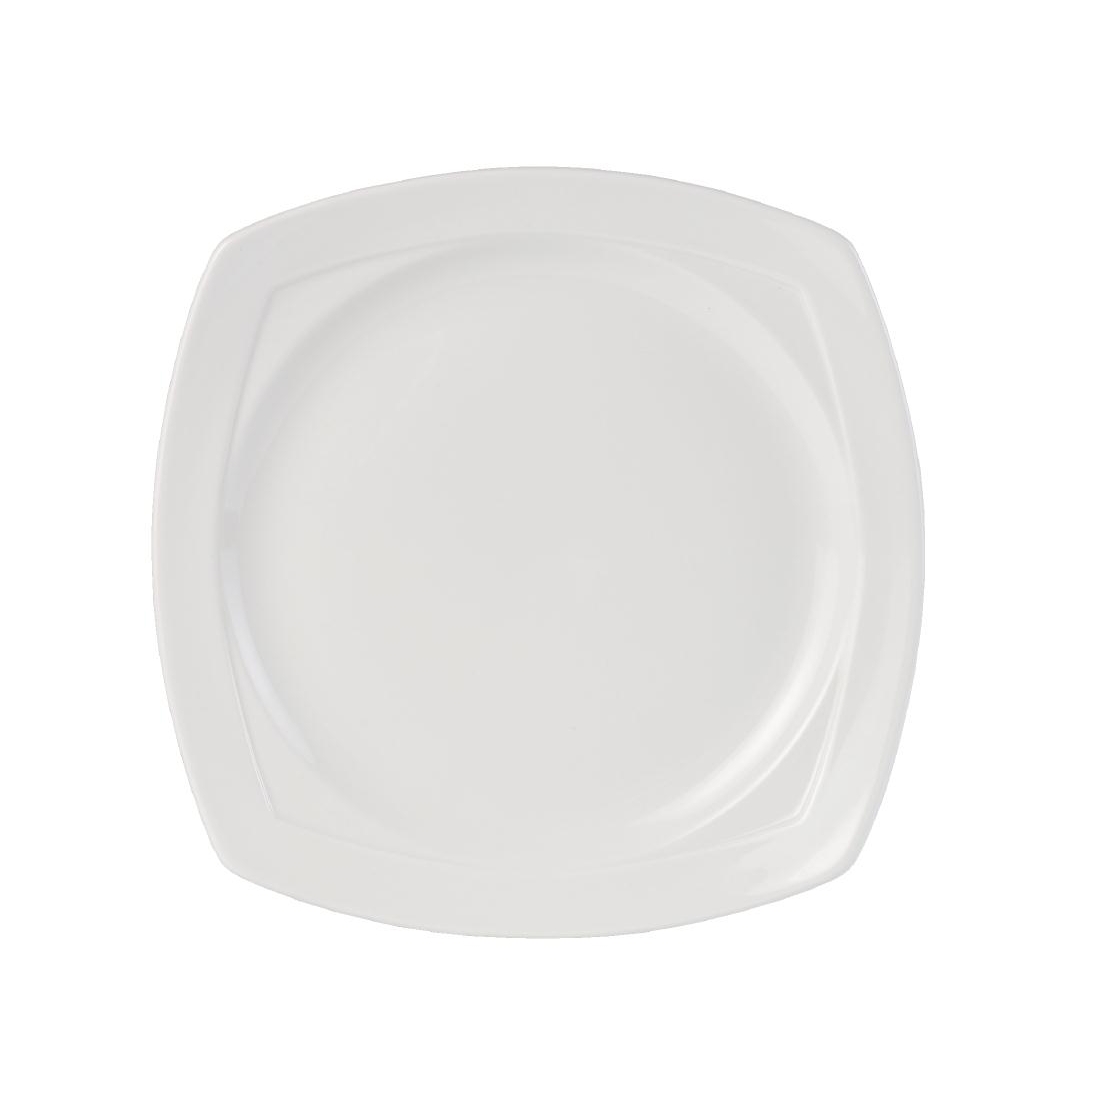 Steelite Simplicity White Harmony Square Plates 280mm